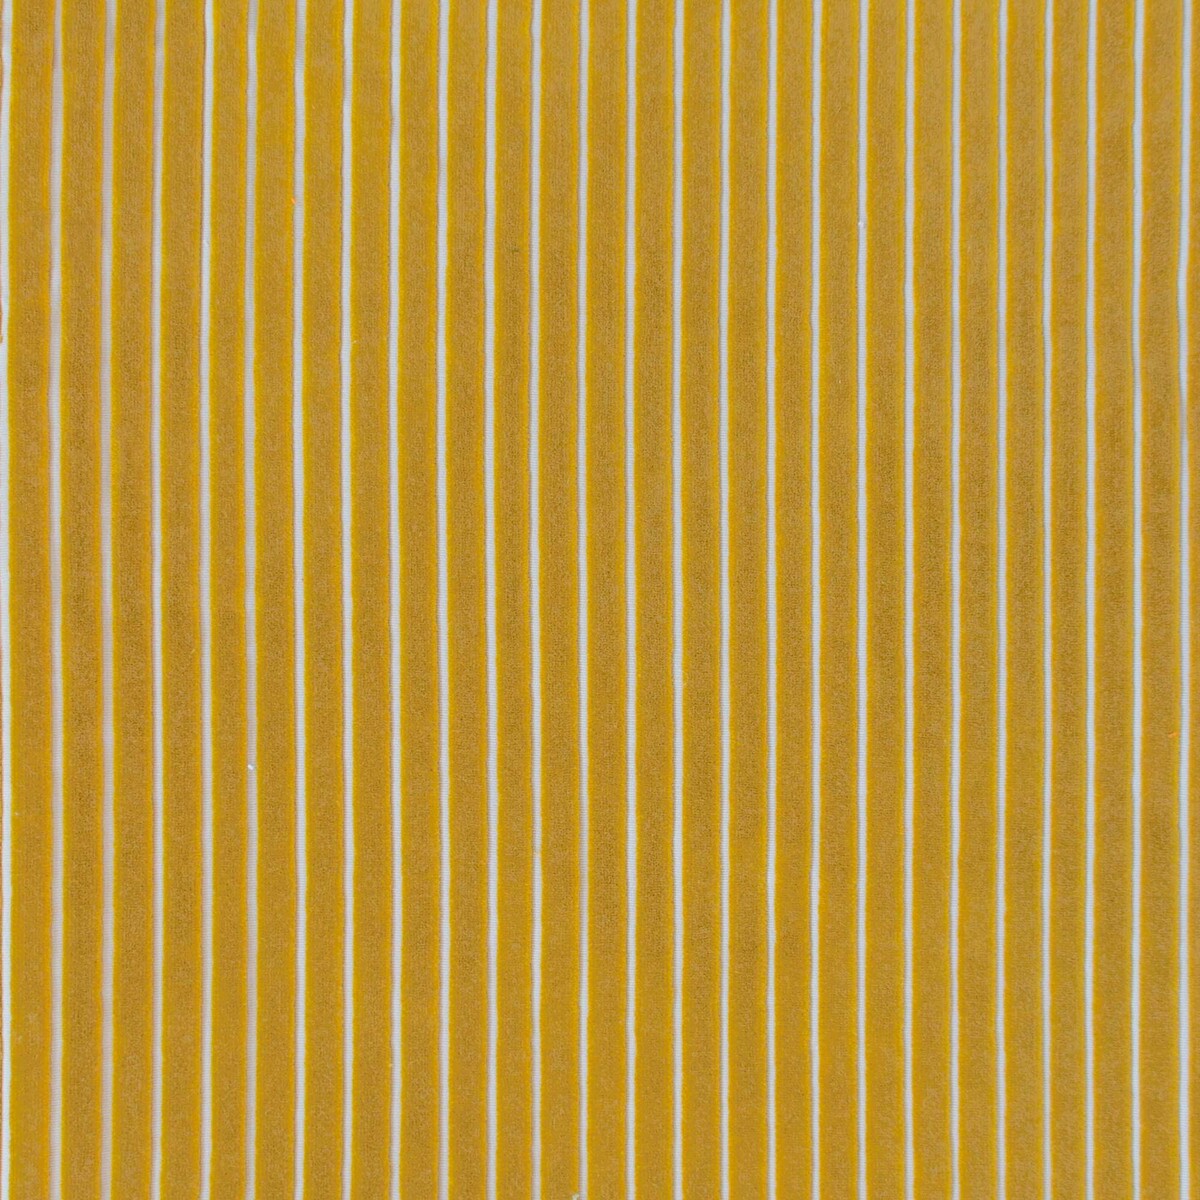 Mayrit fabric in amarillo color - pattern LCT1111.018.0 - by Gaston y Daniela in the Lorenzo Castillo IX Hesperia collection